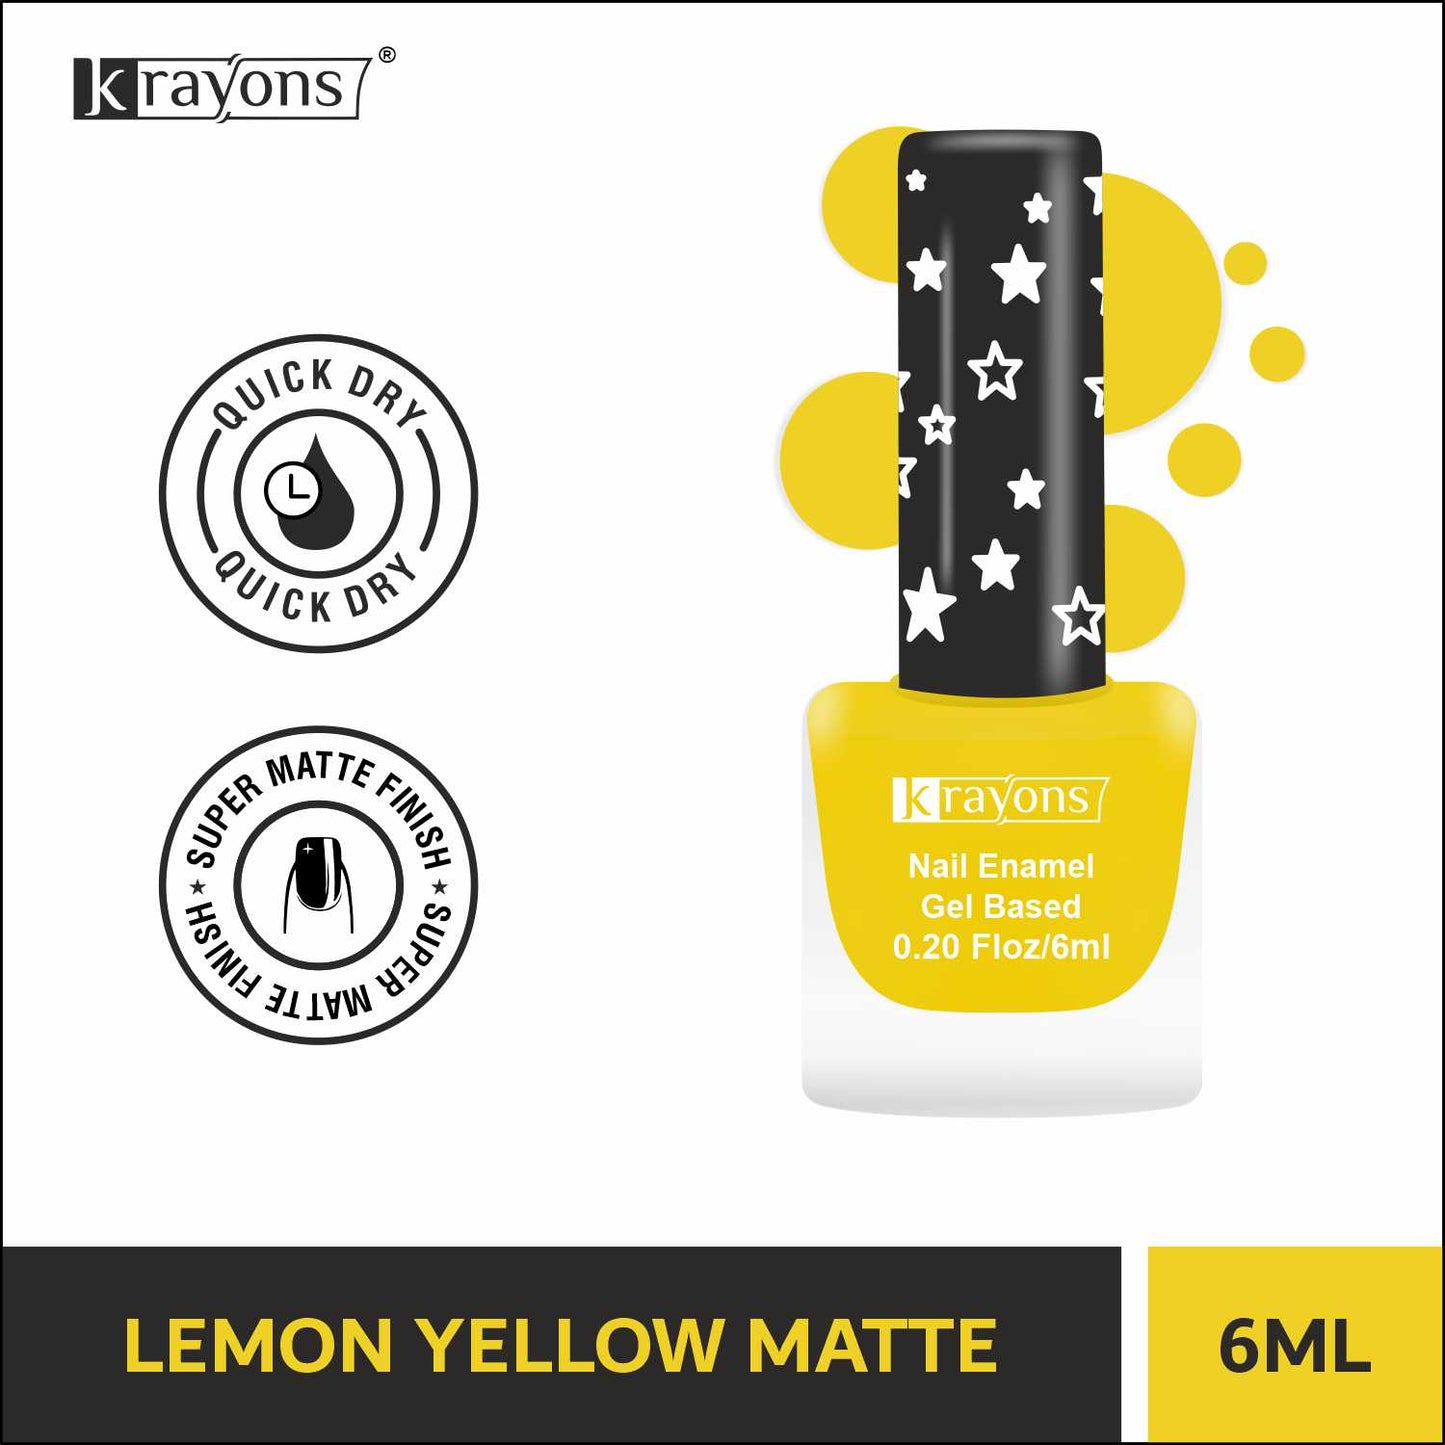 Krayons Cute Super Matte Finish Nail Enamel, Quick Dry, Smooth Finish, LongLasting, Lemon Yellow, 6ml